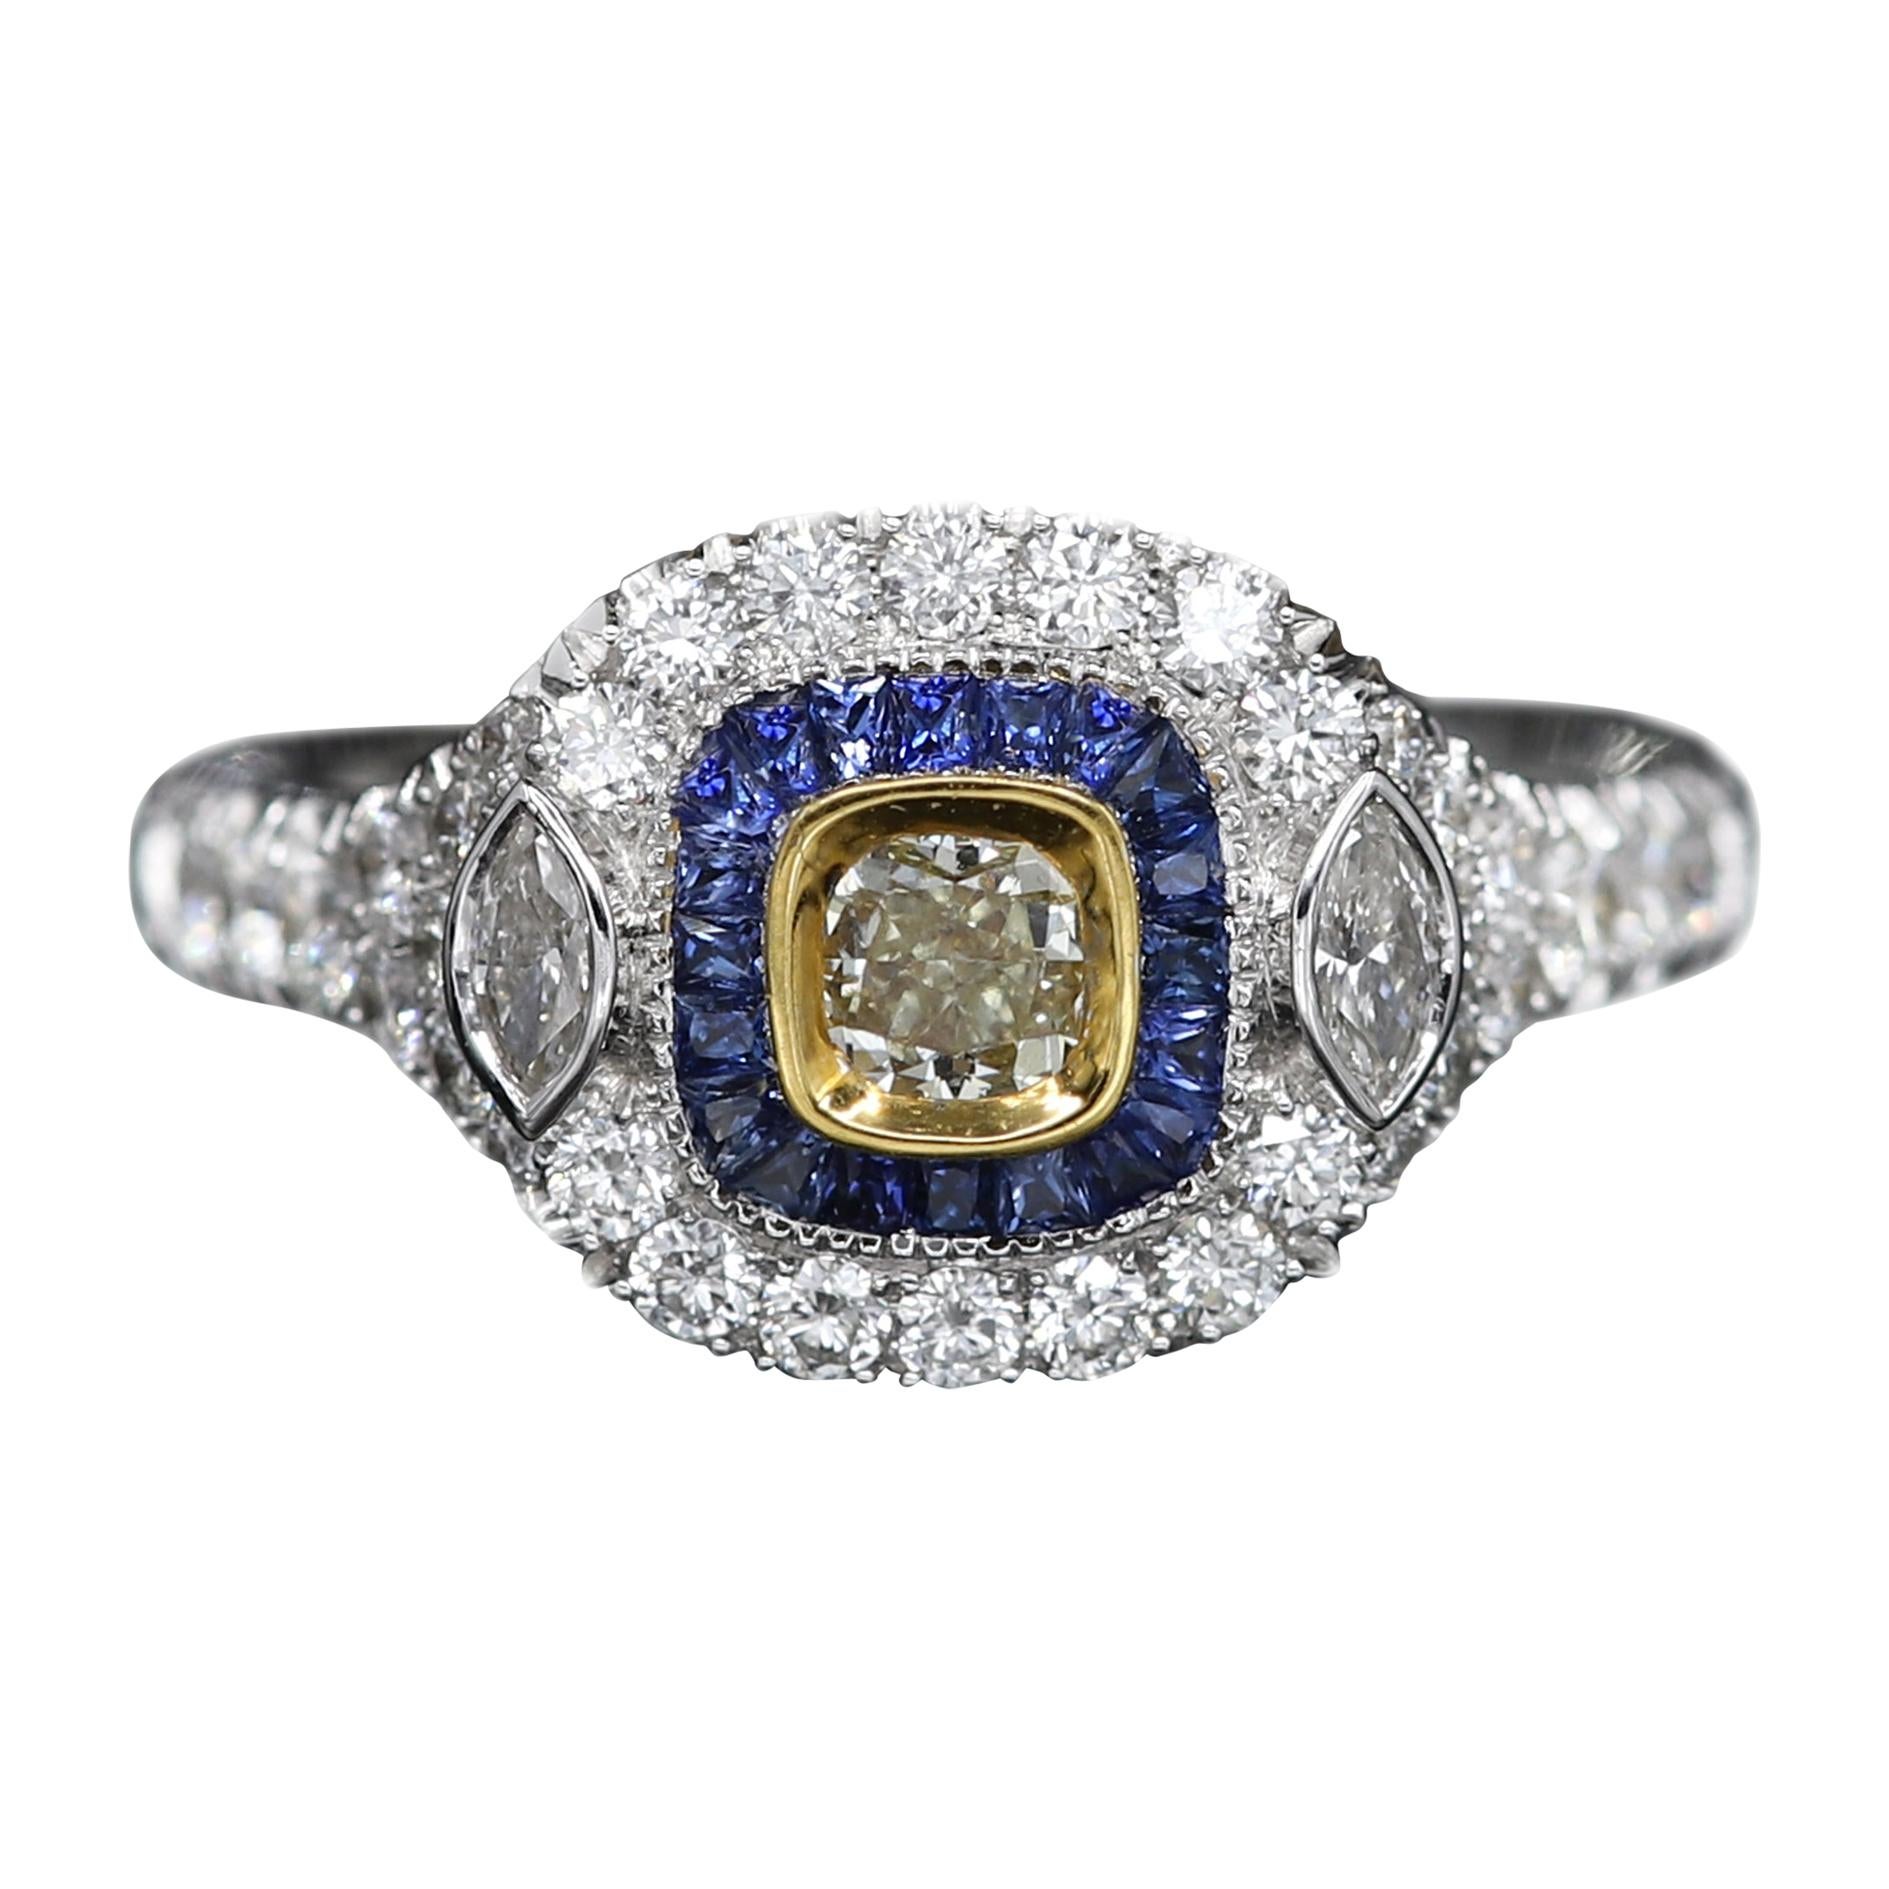 Art Deco Style Ring 18 Karat White Gold Blue Sapphire & Light Yellow Diamond